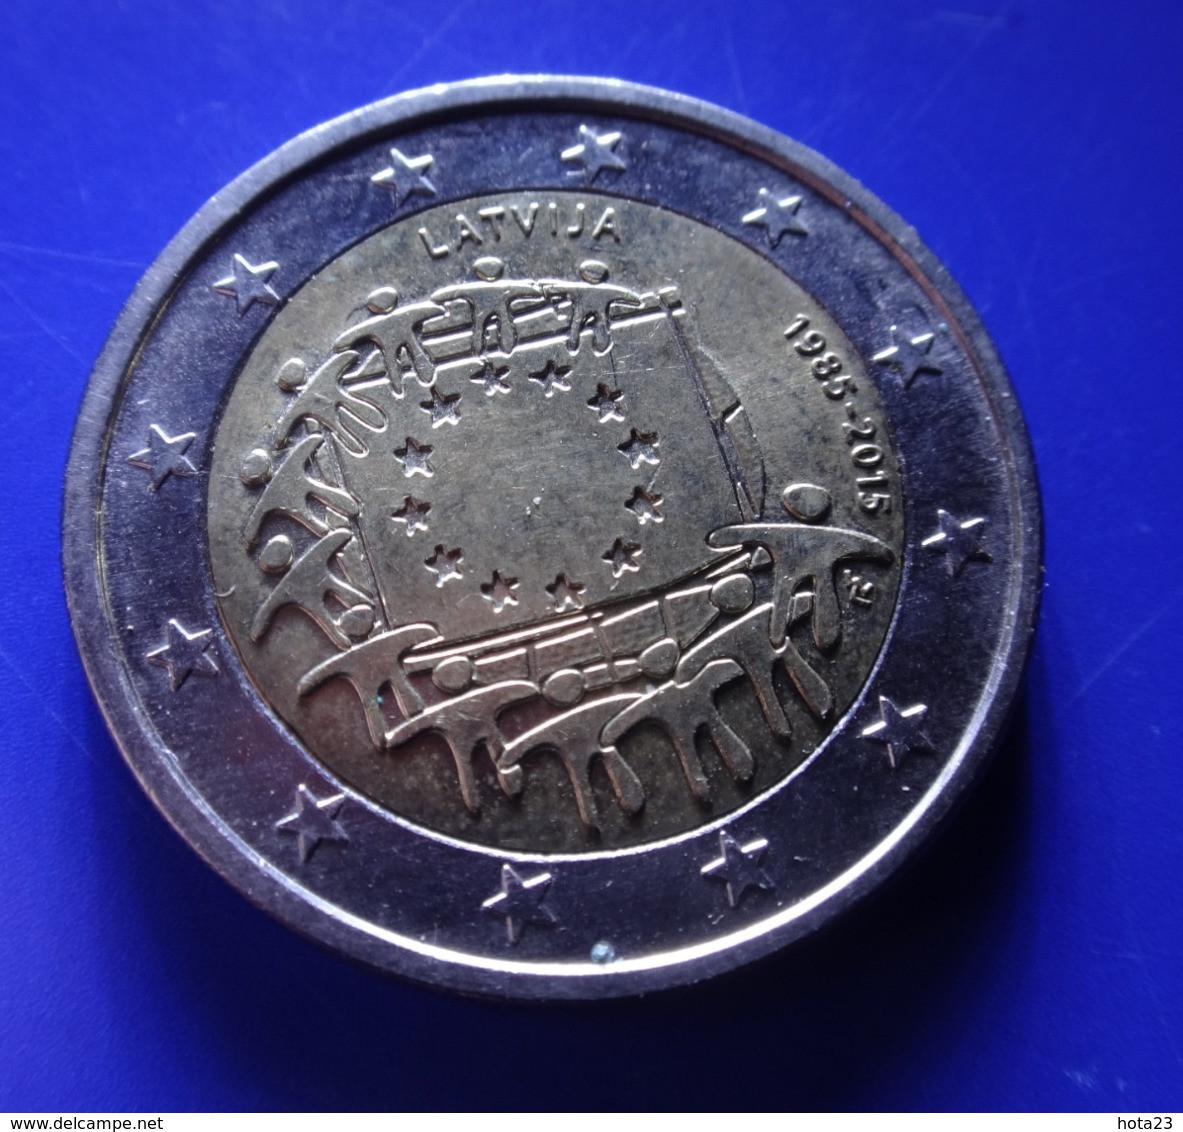 (!)  Latvia 2015 Year 2 Euro Commemorative Coin "30 Years Of EU Flag"  !!!  CICULATED  !!!! - Letland